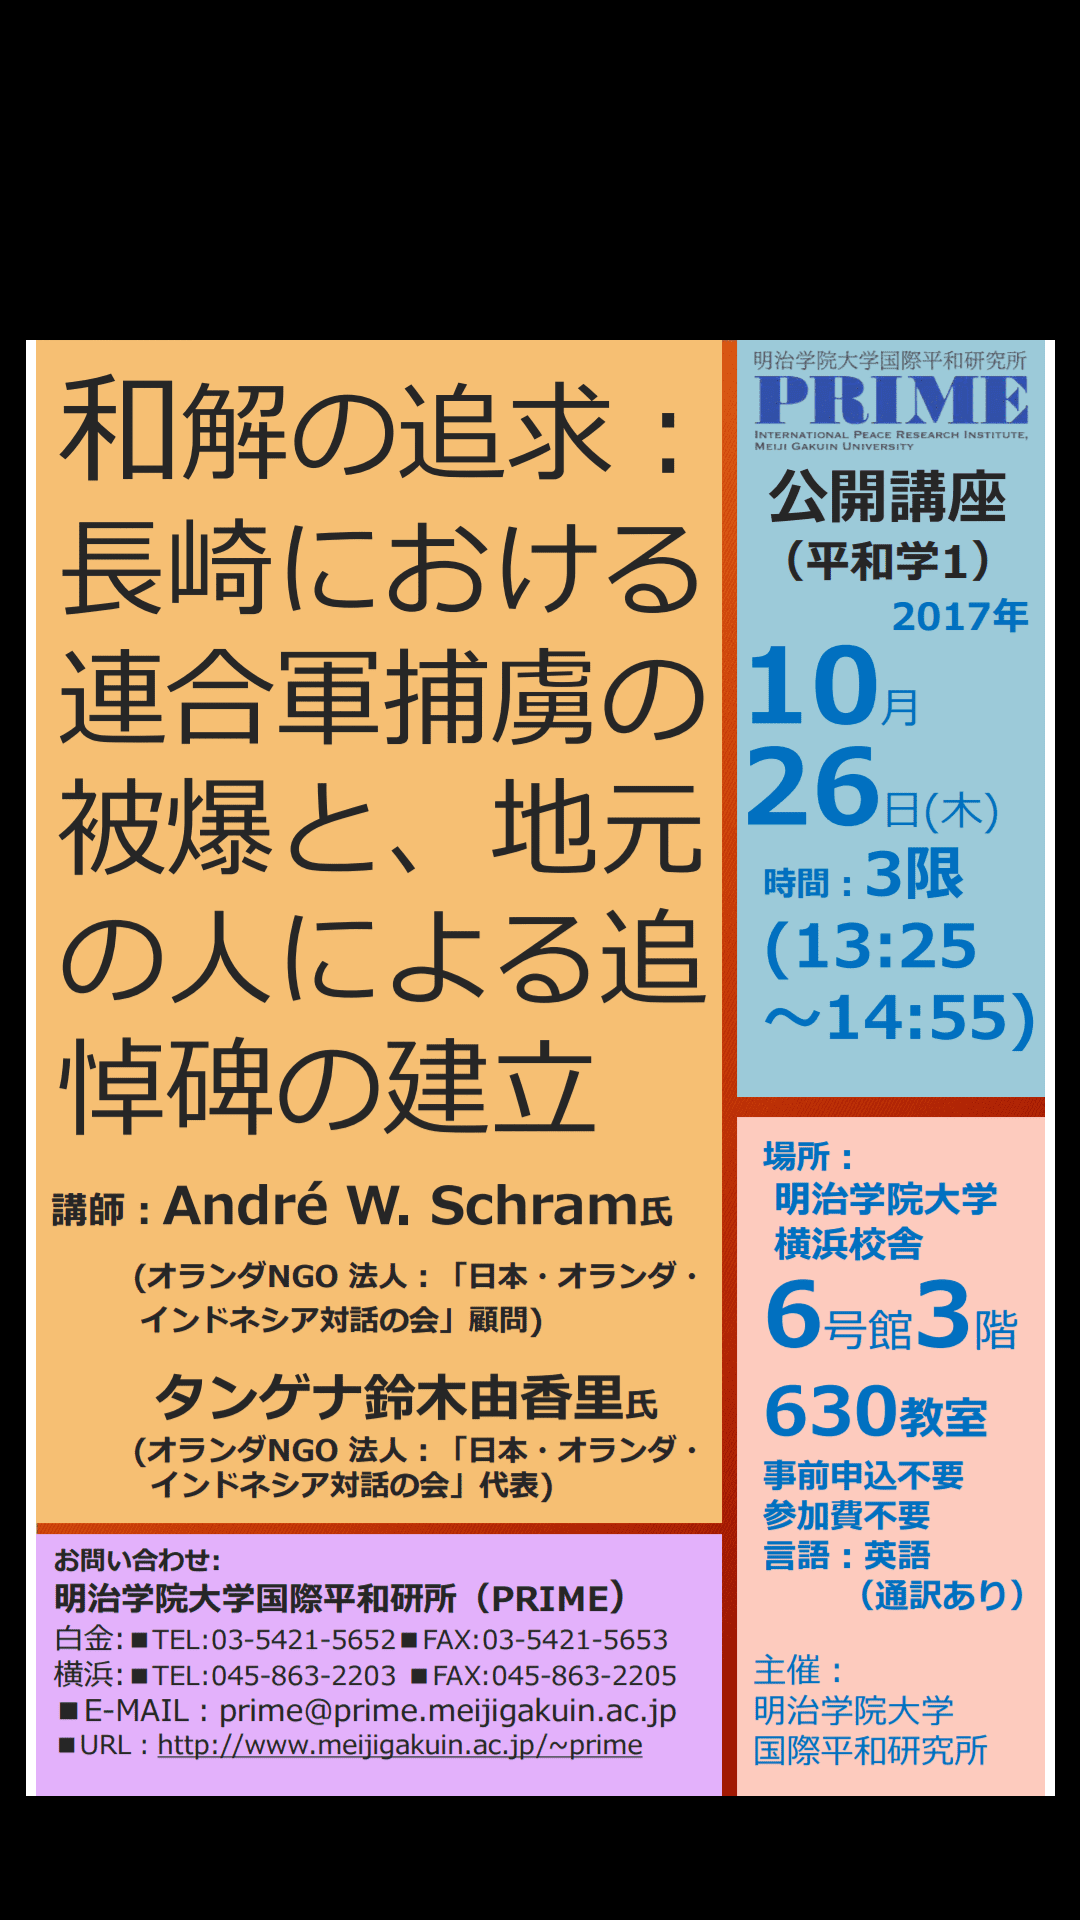 Open Lecture At Meiji Gakuin University On The Yokohama Campus On October 26th 17 Dialoognji